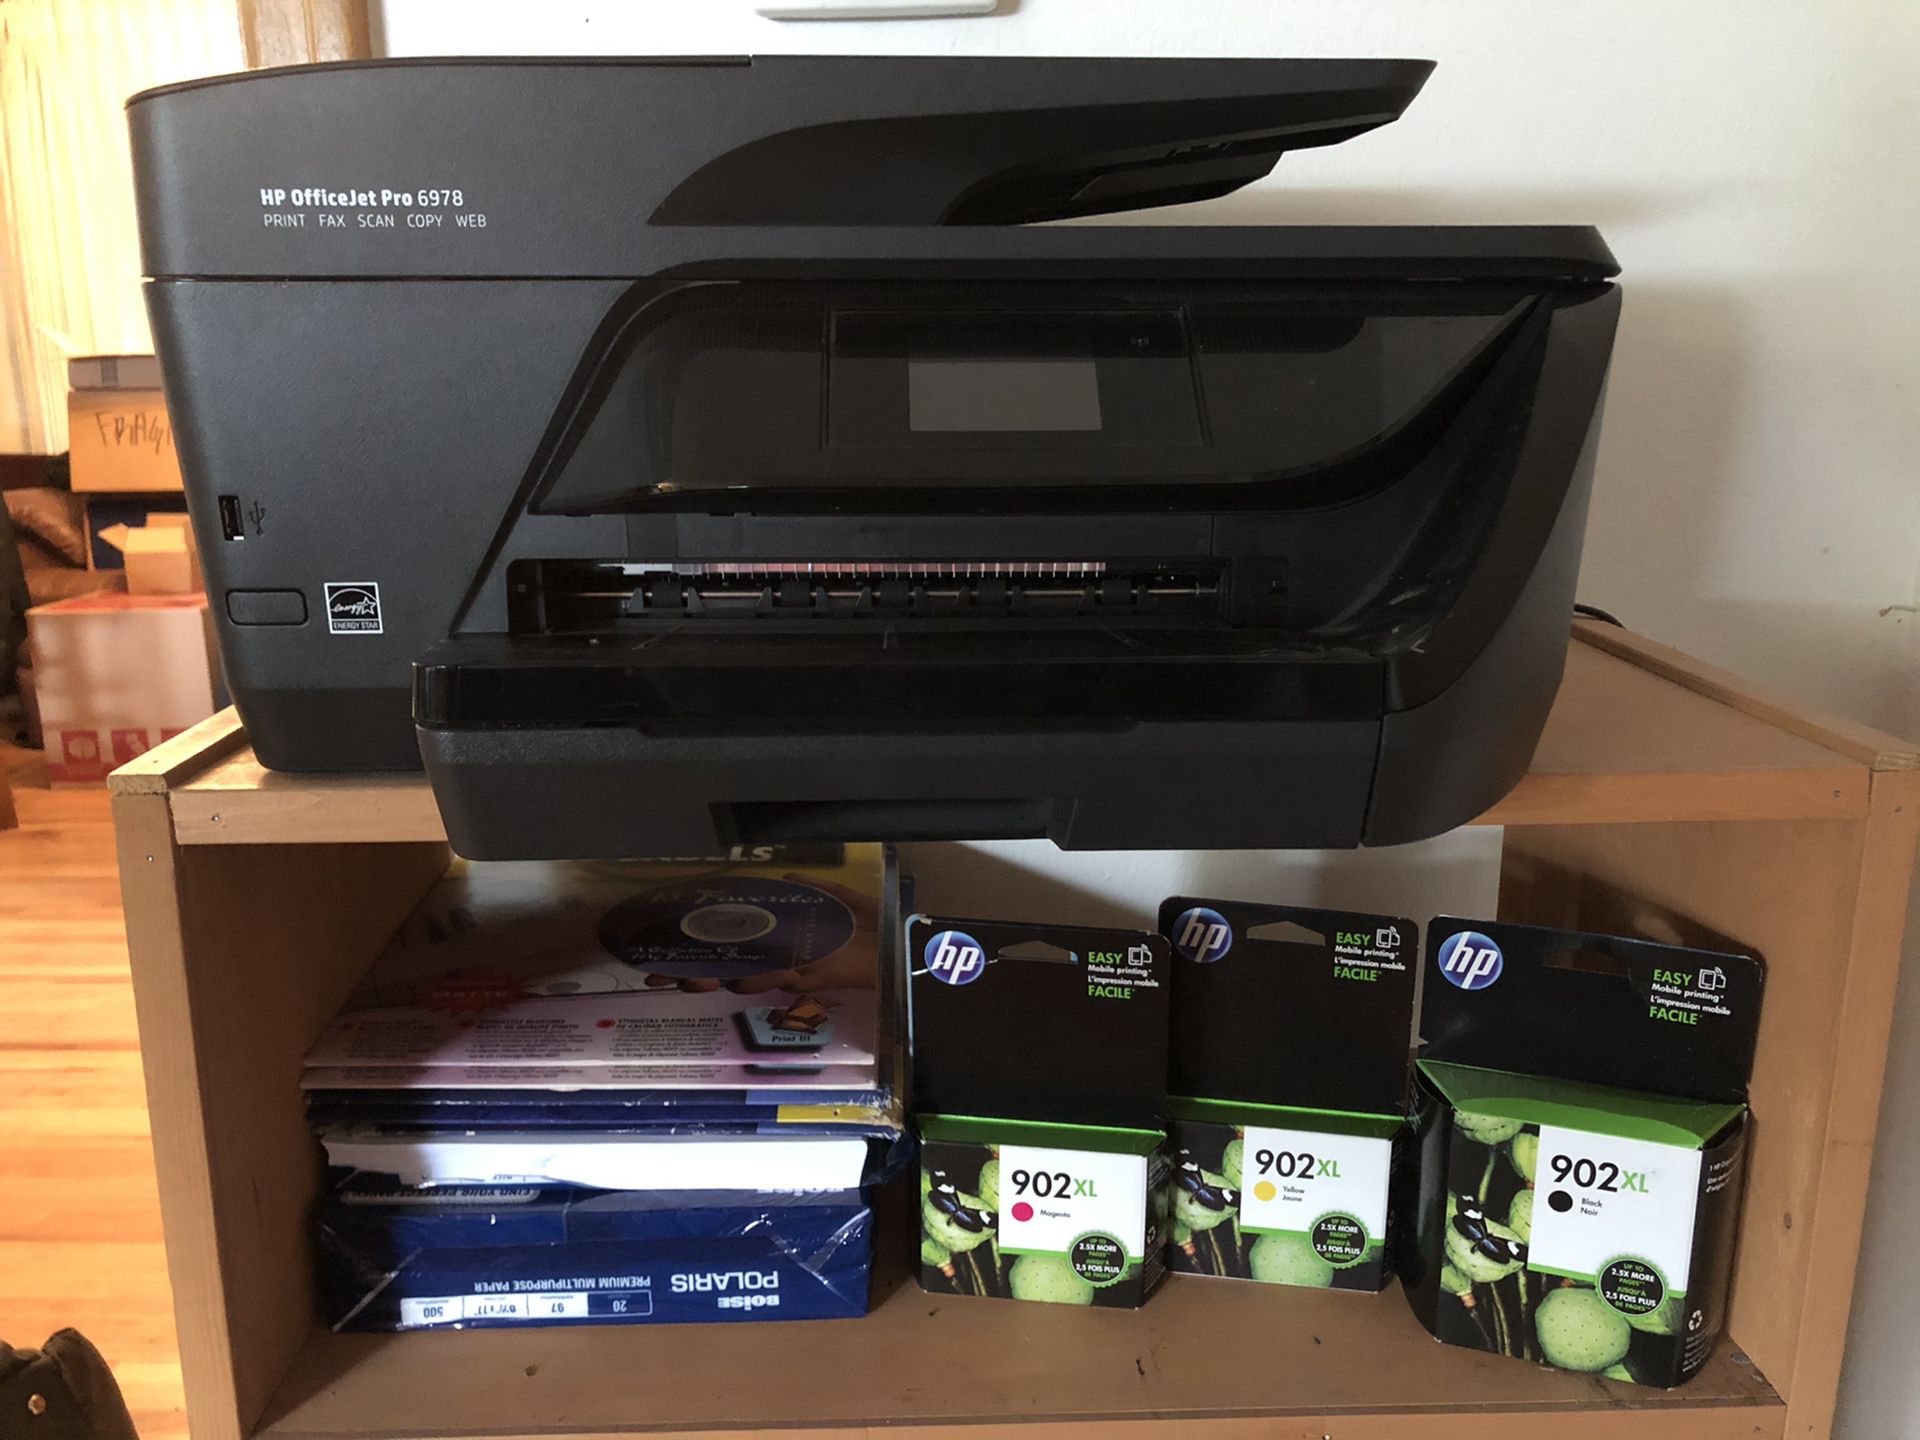 HP OfficeJet Pro 6978 (printer, fax, scan, copy, web)